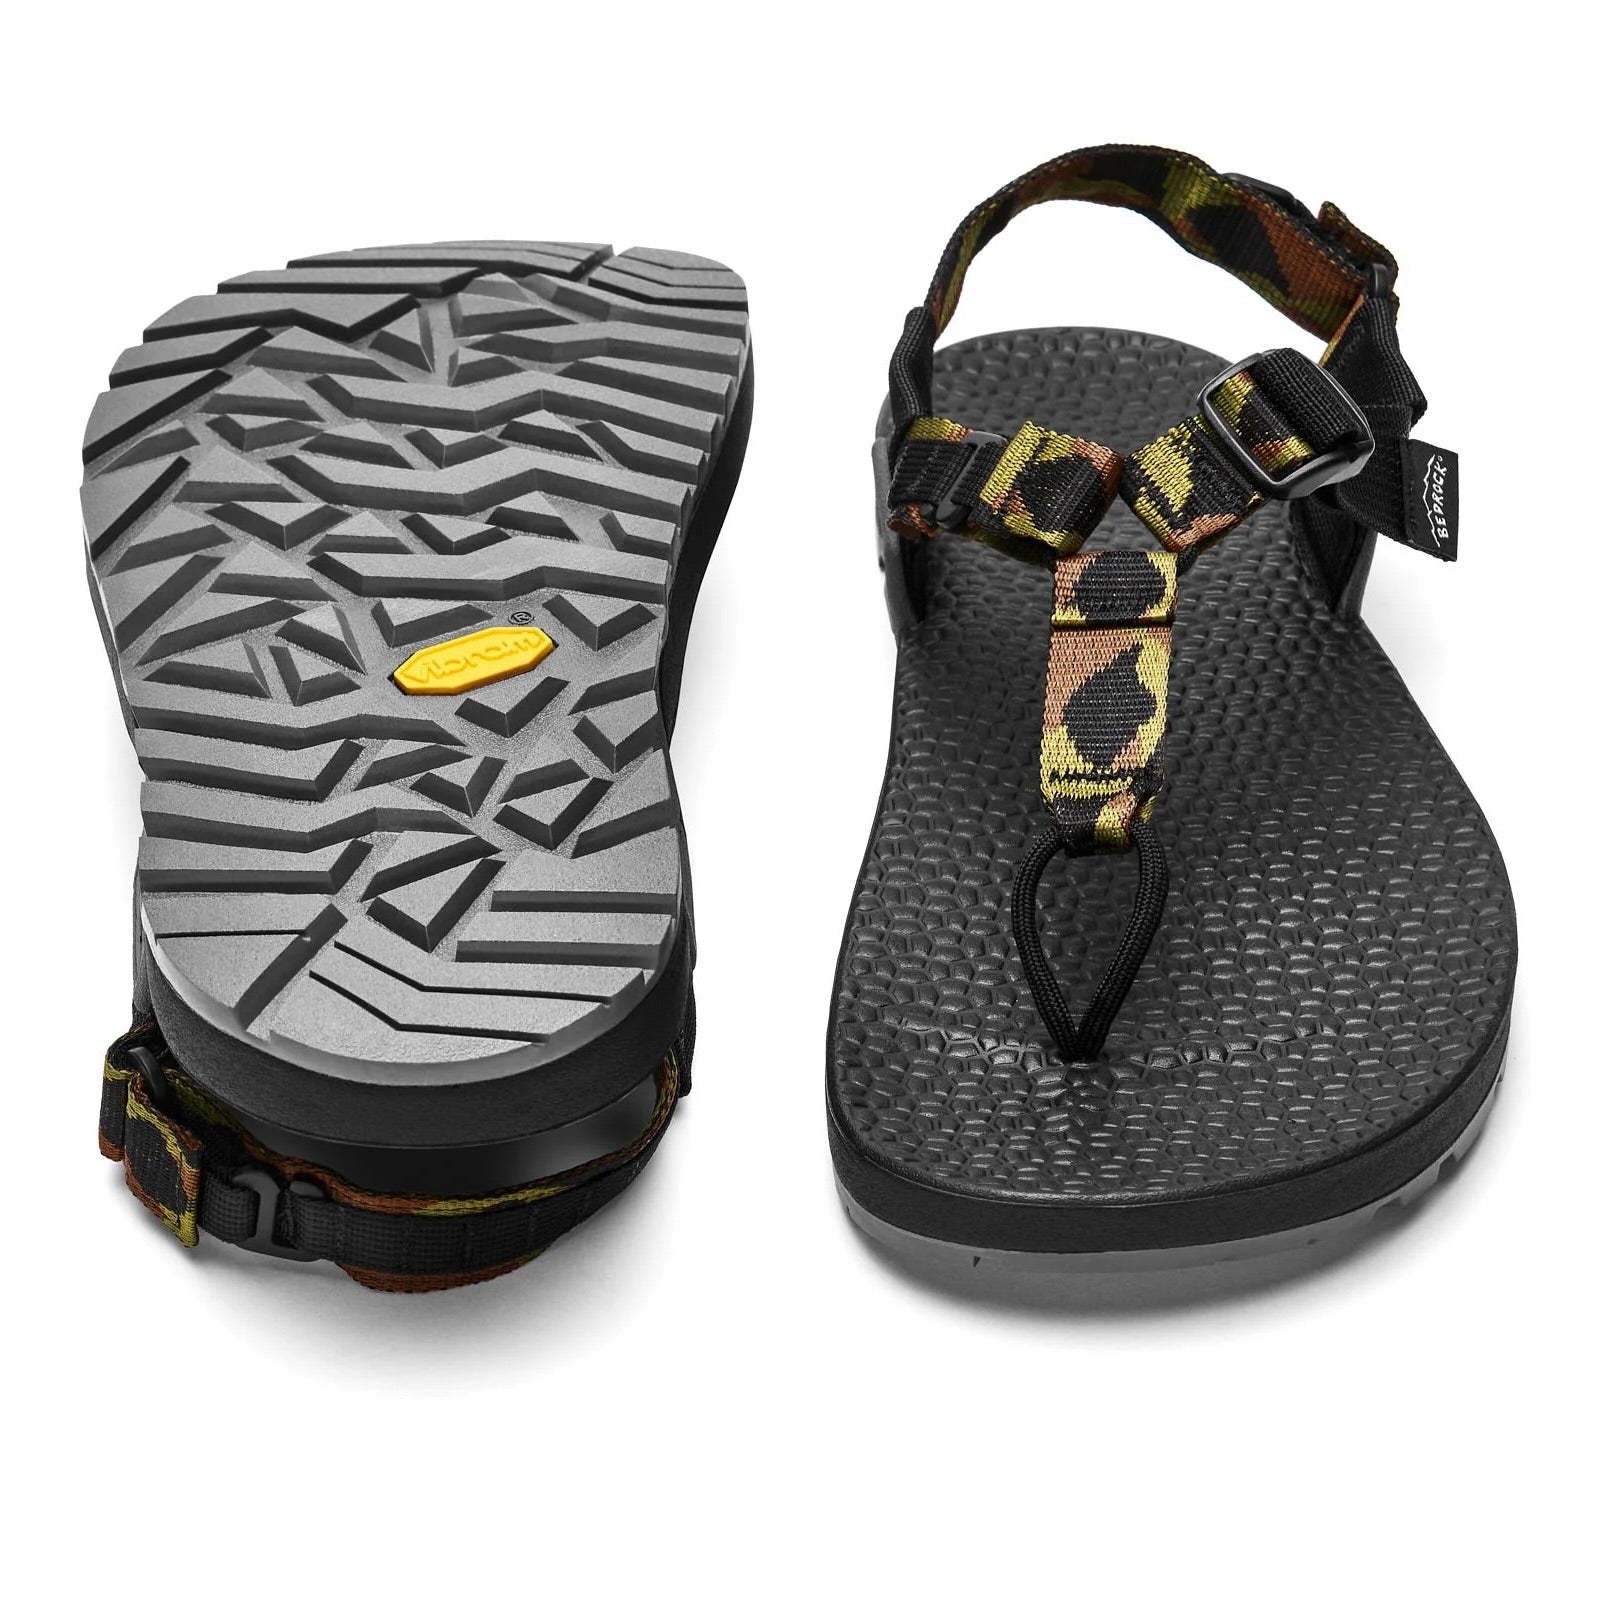 BEDROCK SANDALS Cairn Evo 3D Pro Sandals